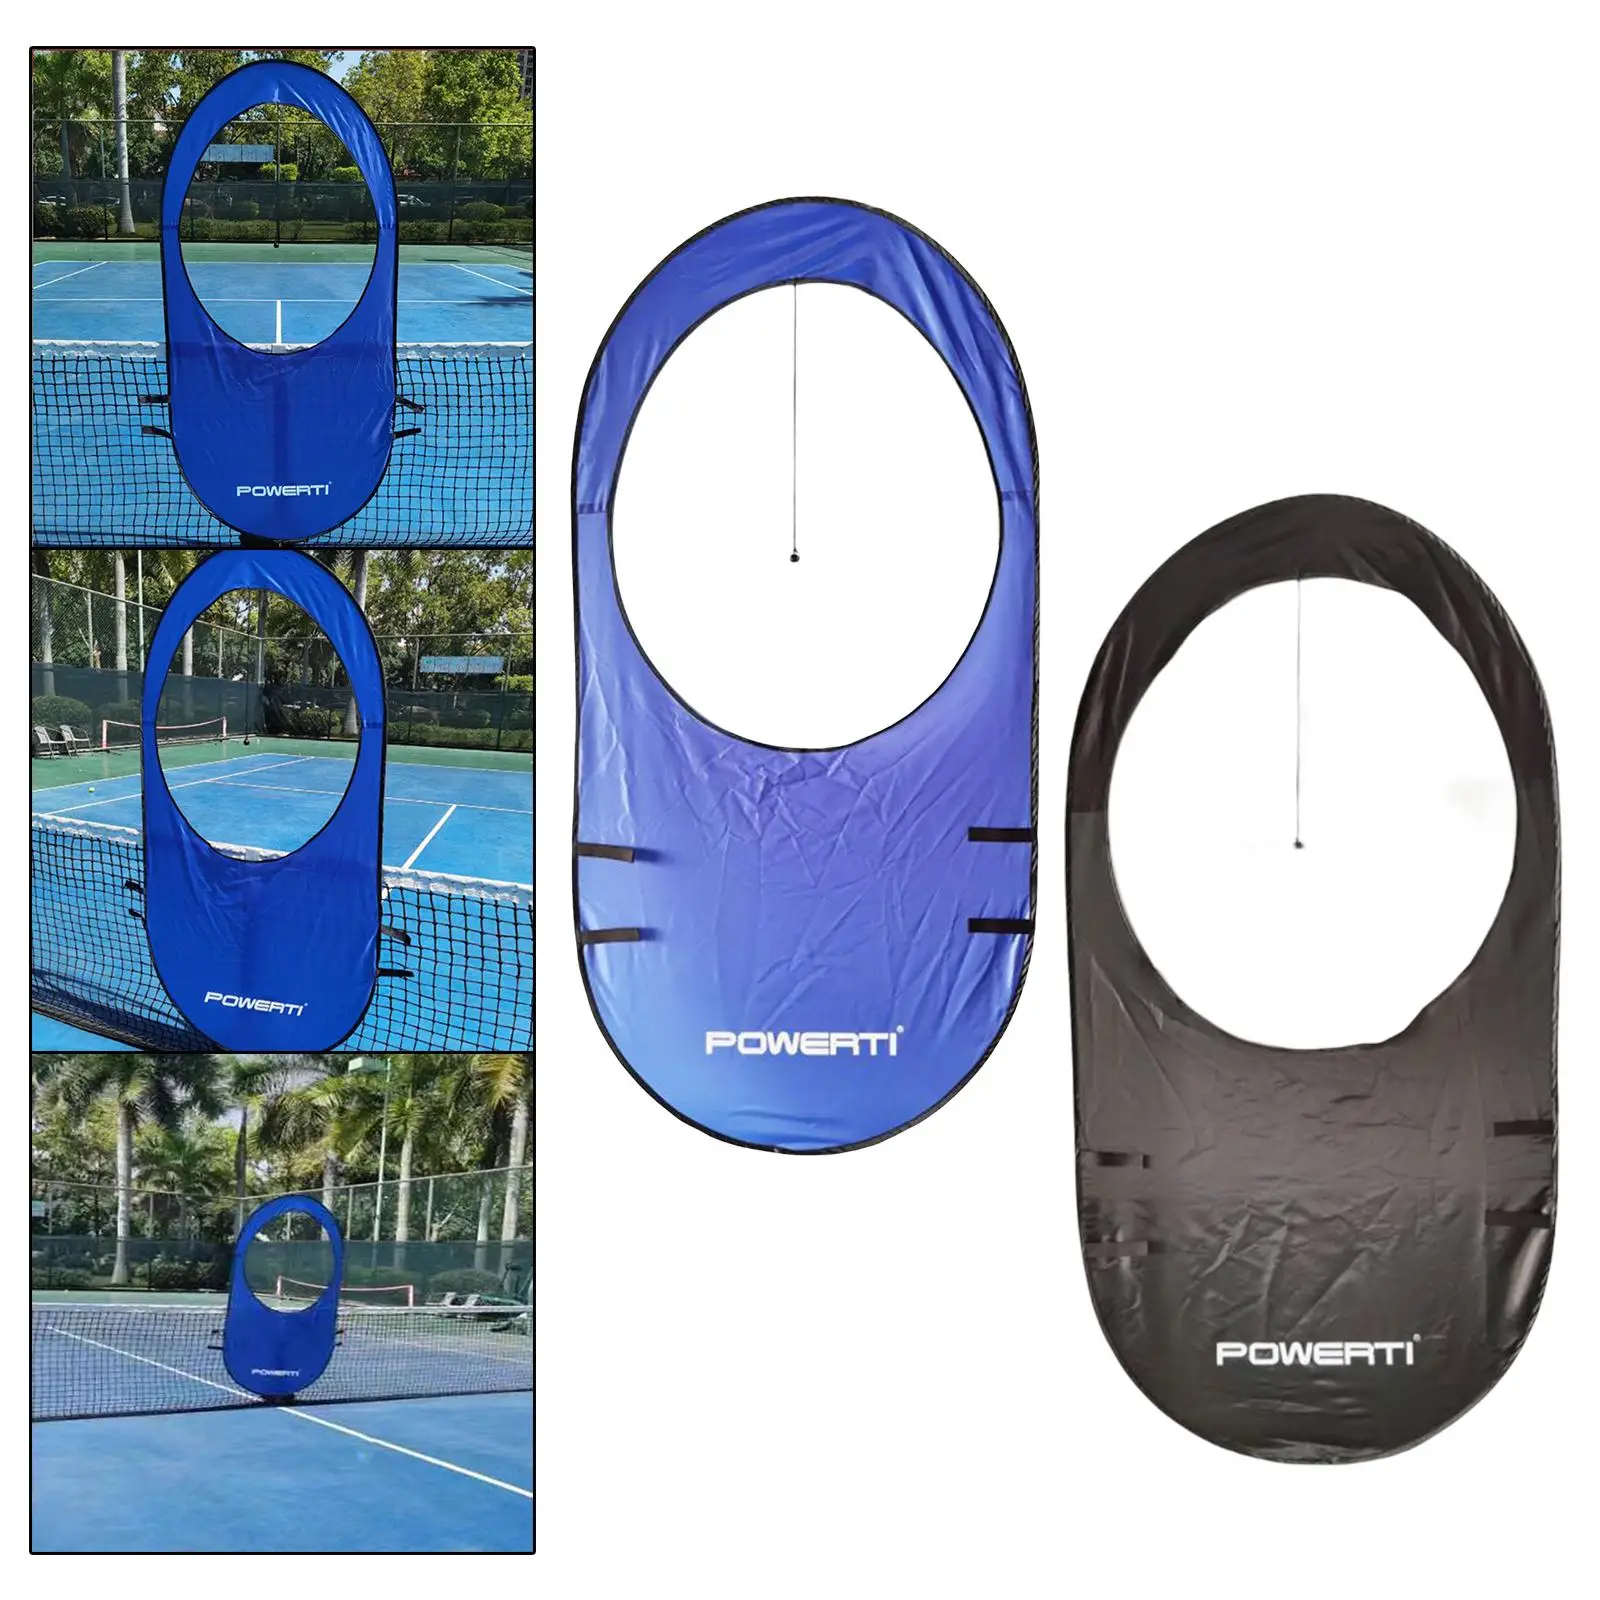 Large Tennis Training Target Racquet Trainer Driving Range Hitting Practice Rings Accessories Window